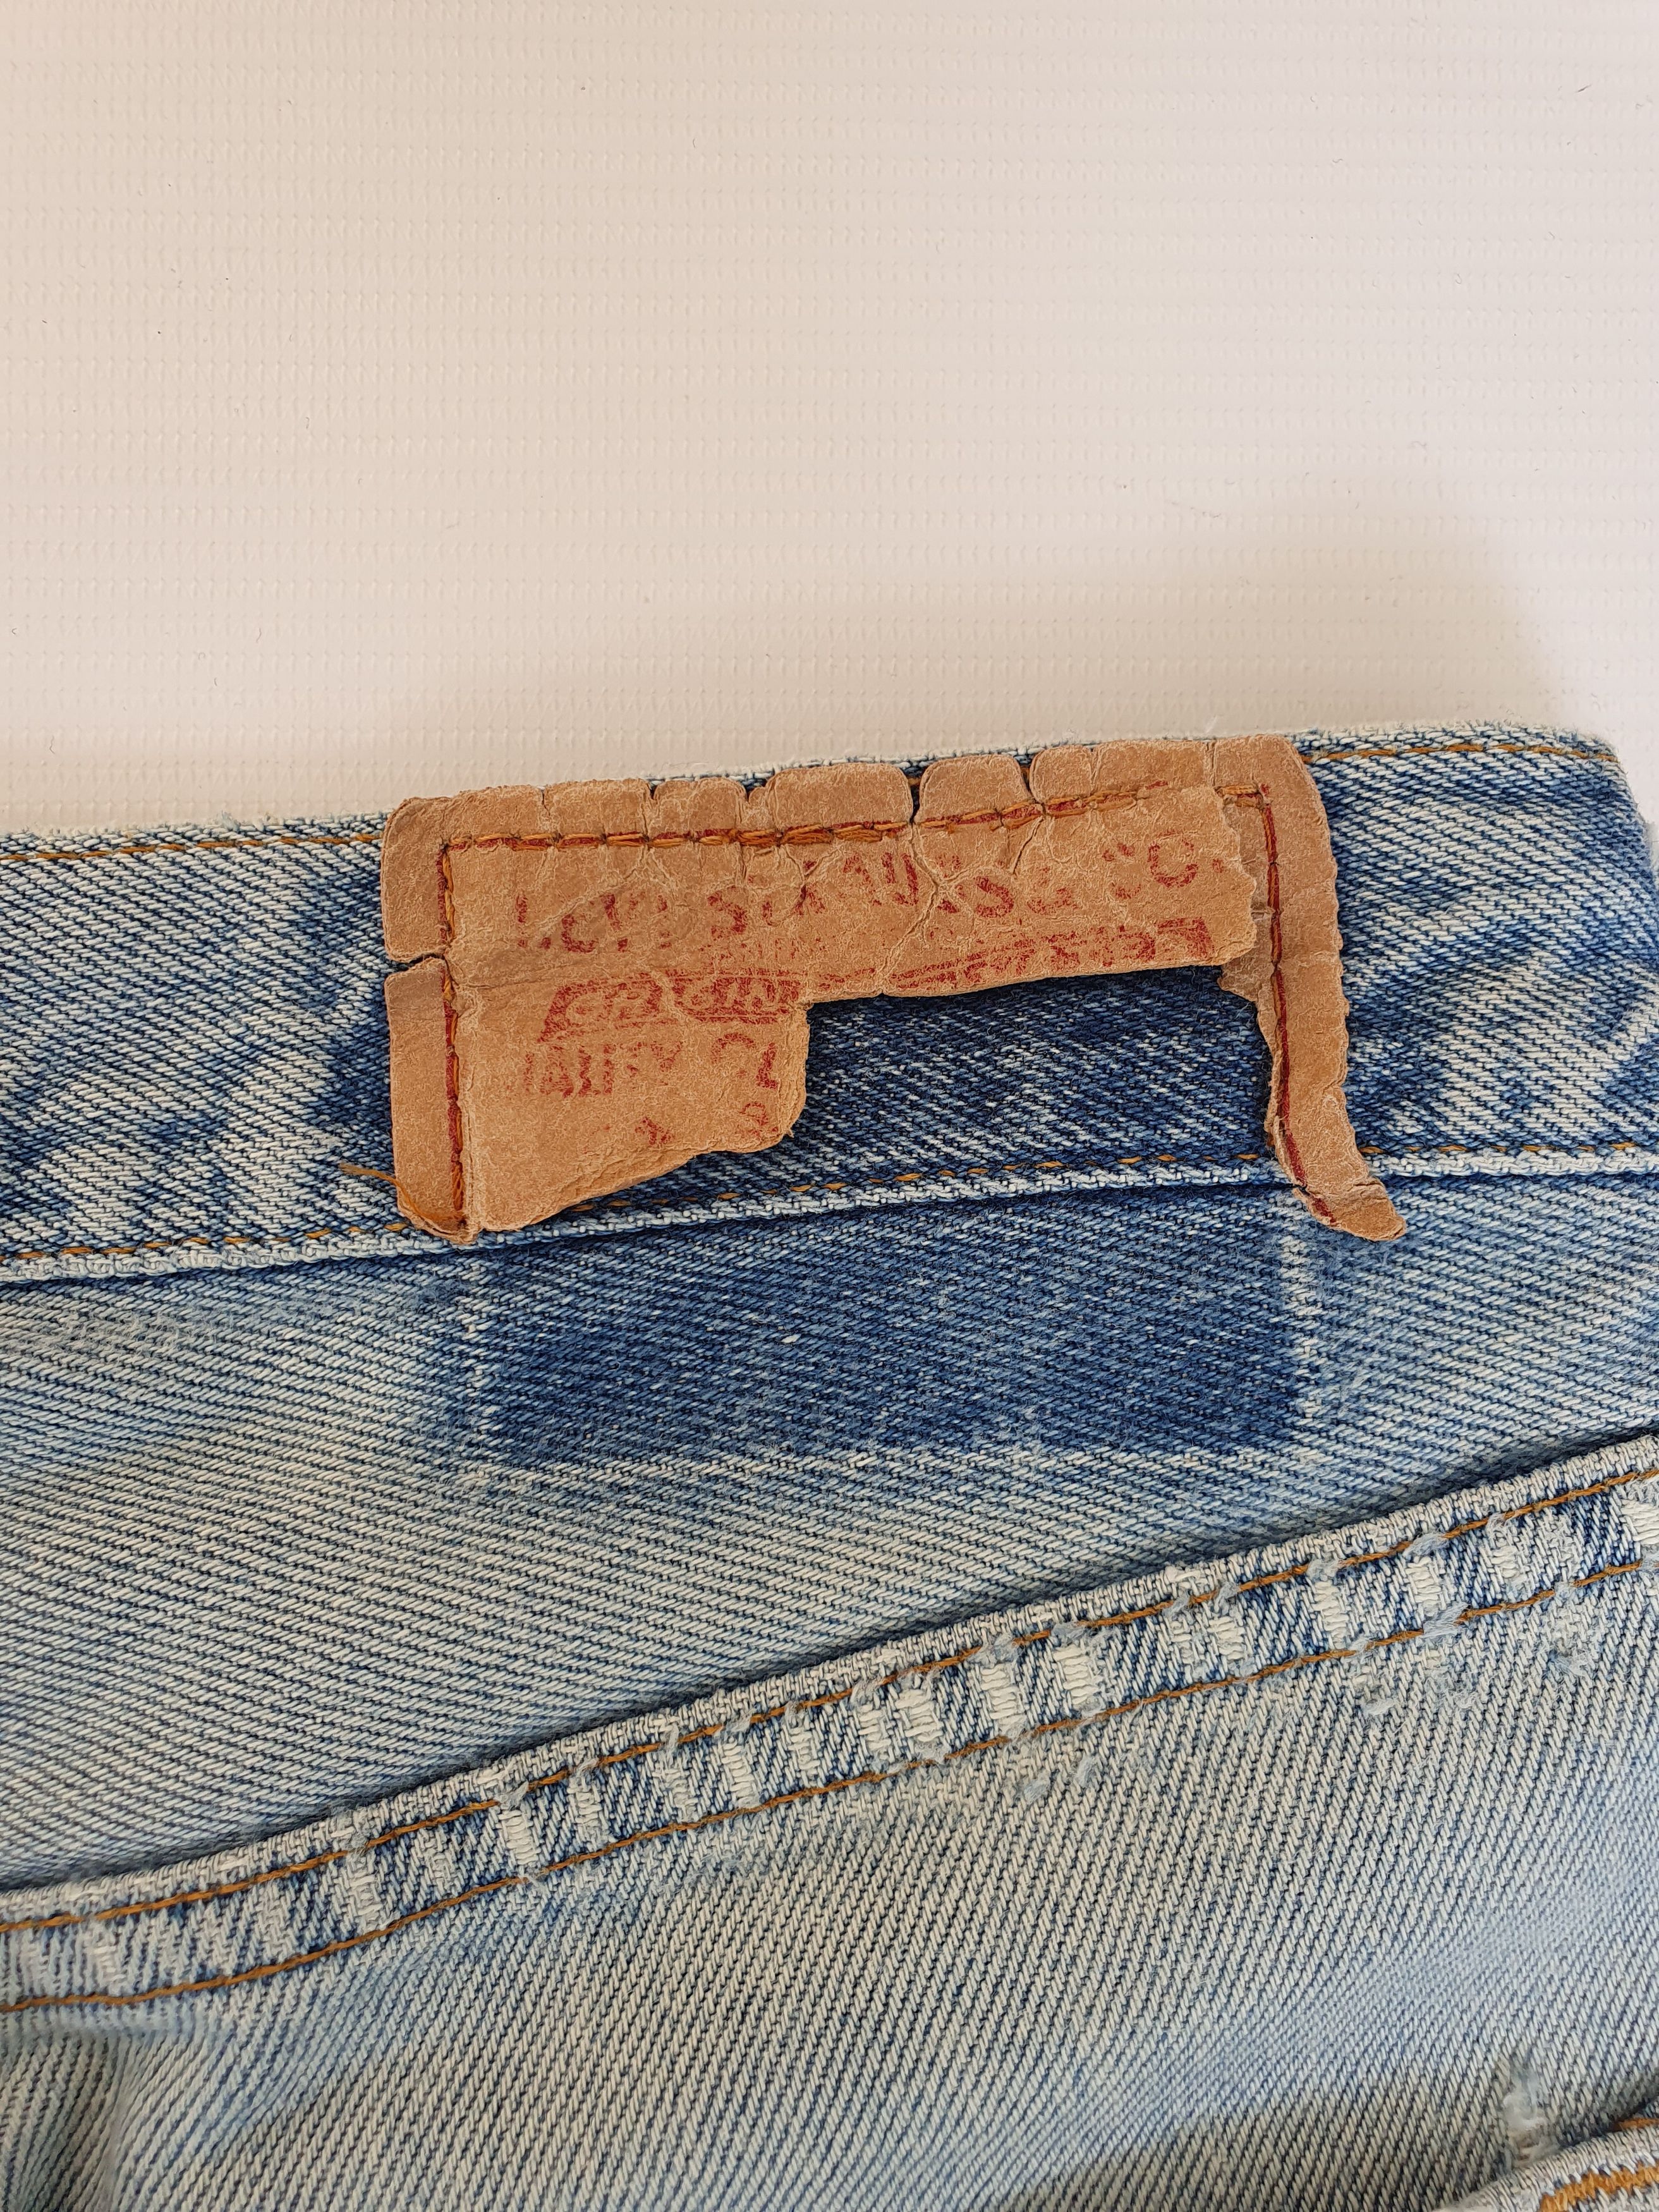 Vintage 1994 Vintage LEVIS 501 Dirty Distressed Jeans Size US 33 - 5 Thumbnail